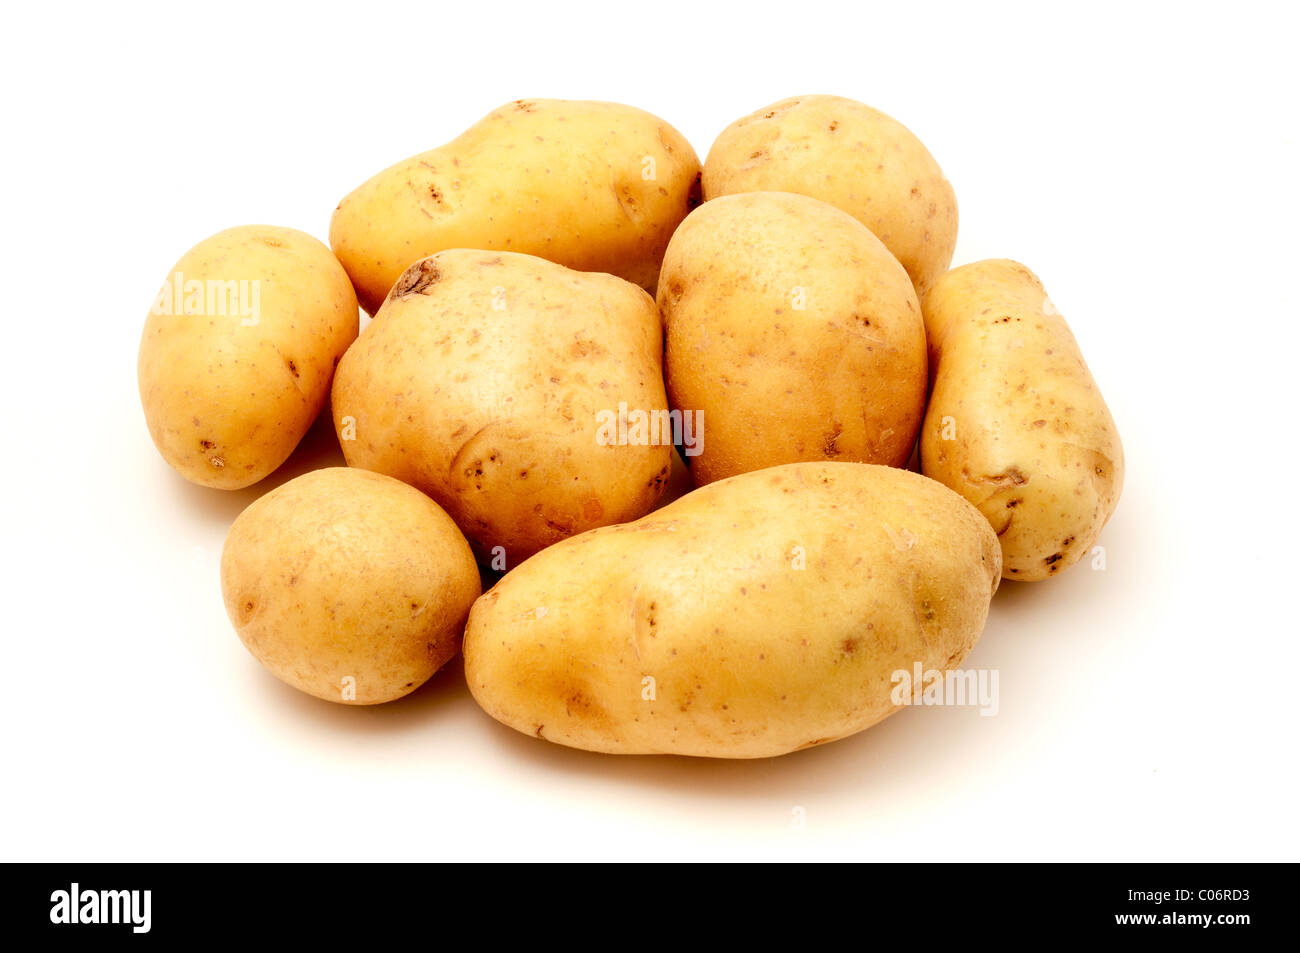 Monalisa potatoes on a white background Stock Photo